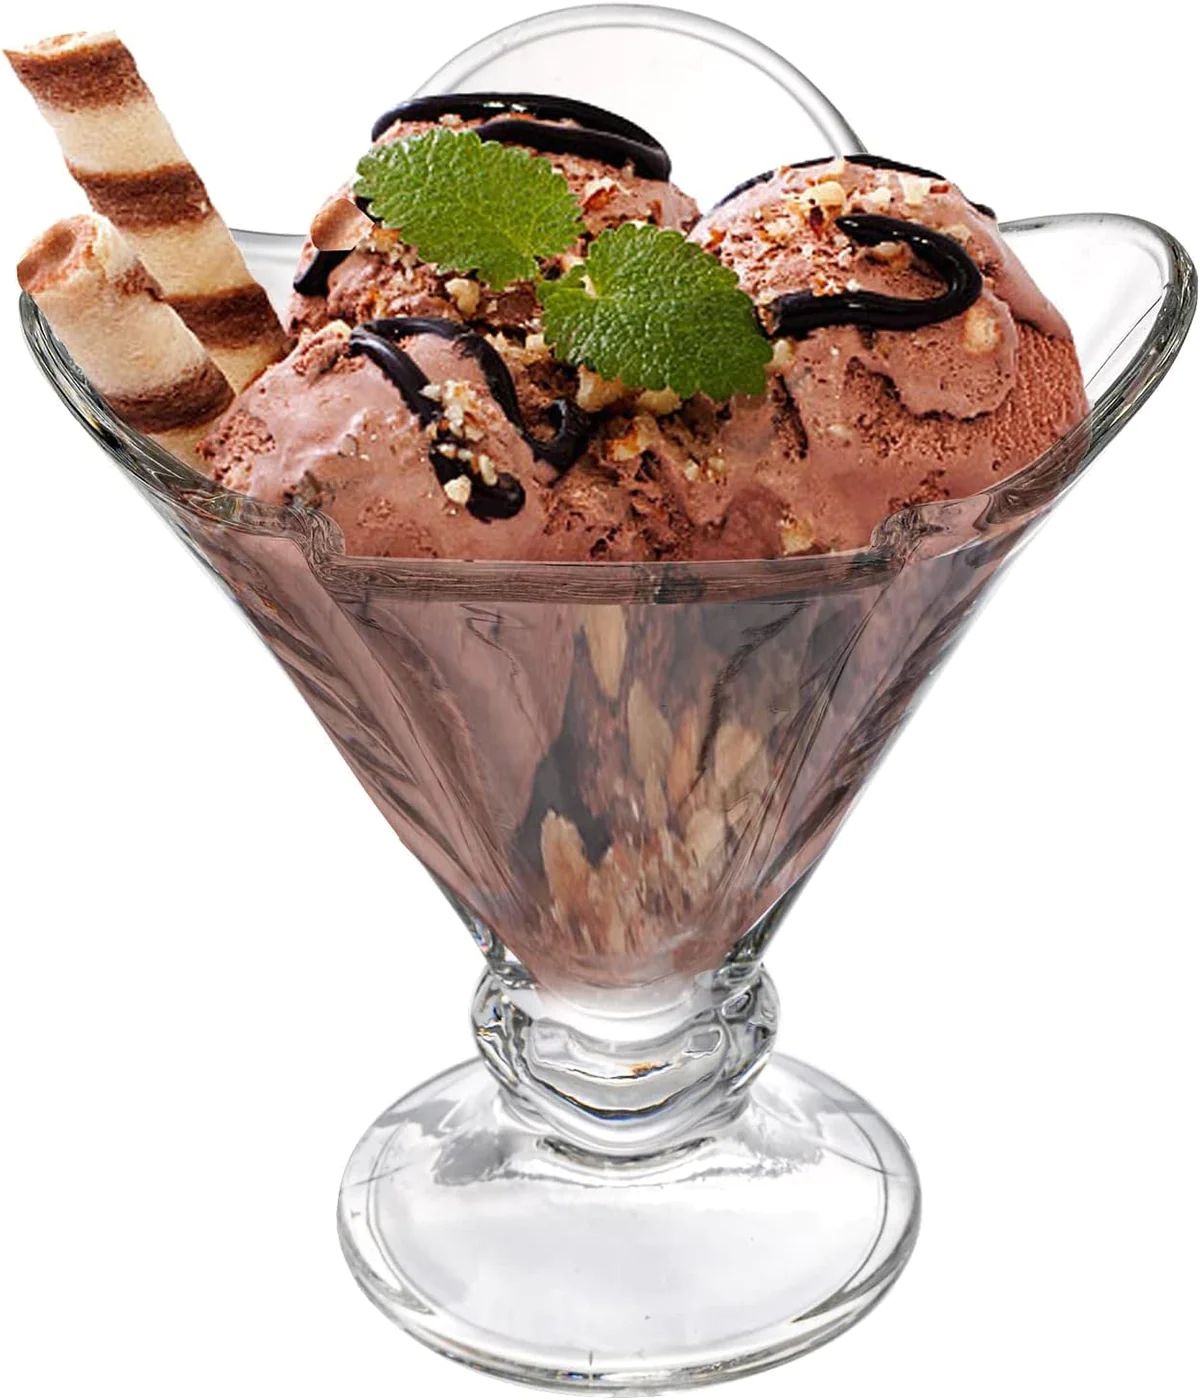 Transparent Ice Cream and Dessert Bowl - Set of 3